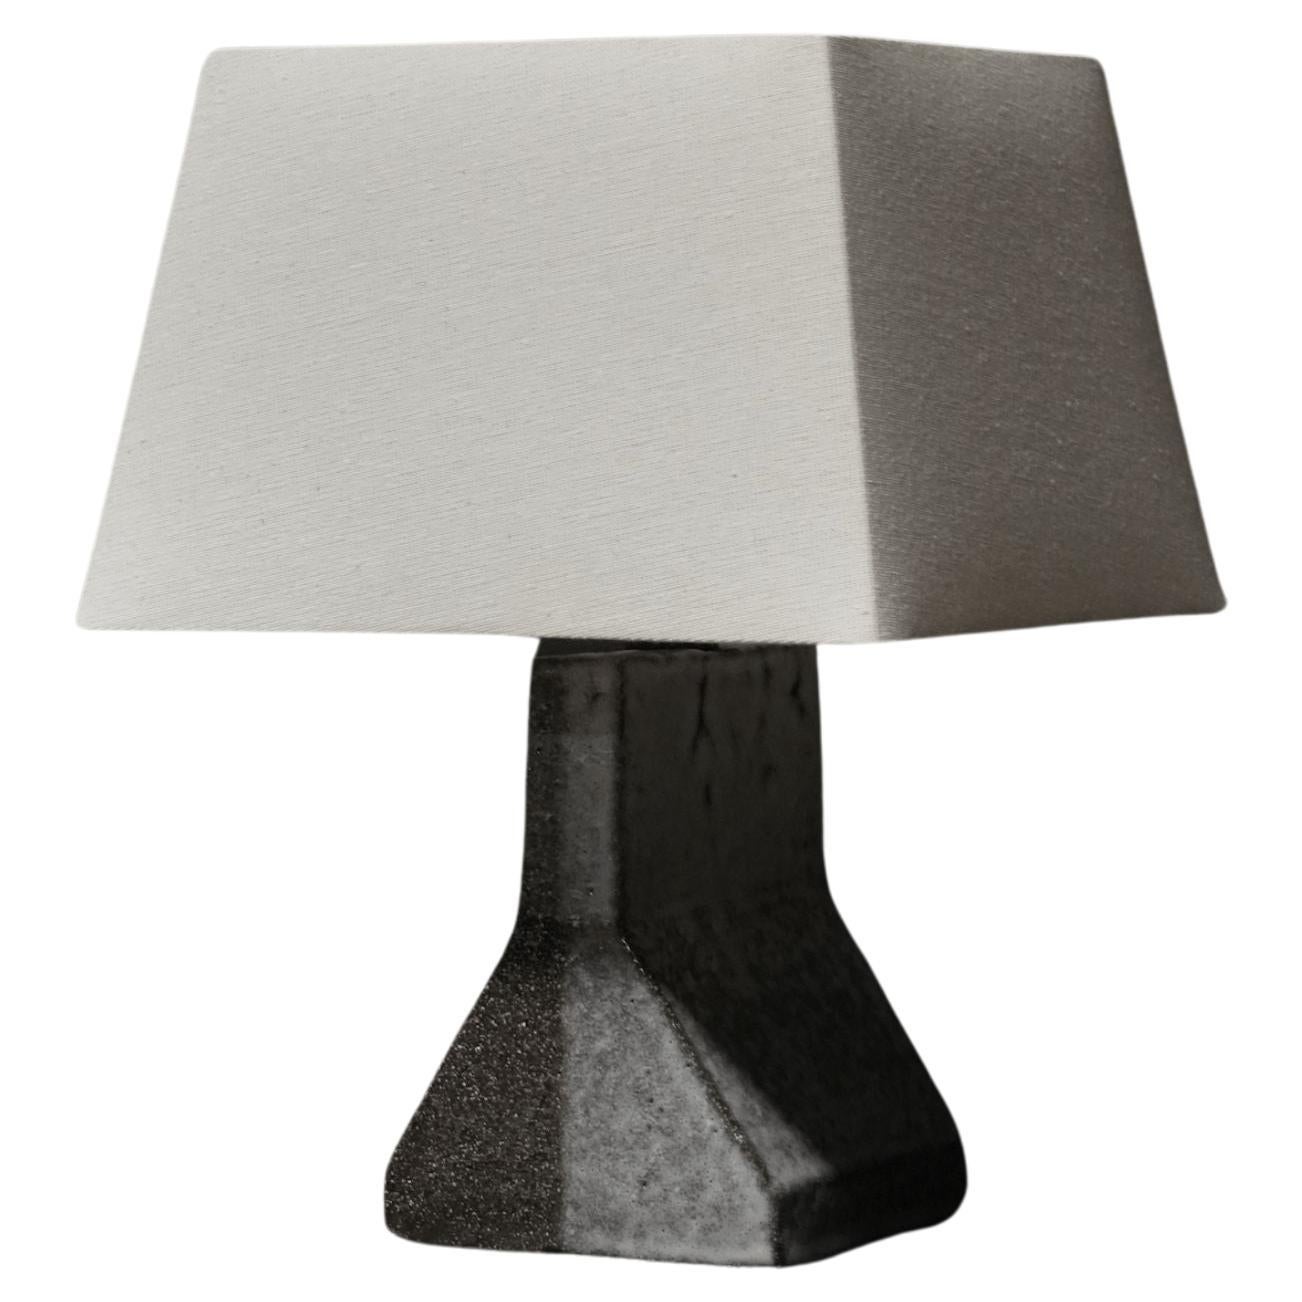 50/50 Ceramic Table Lamp